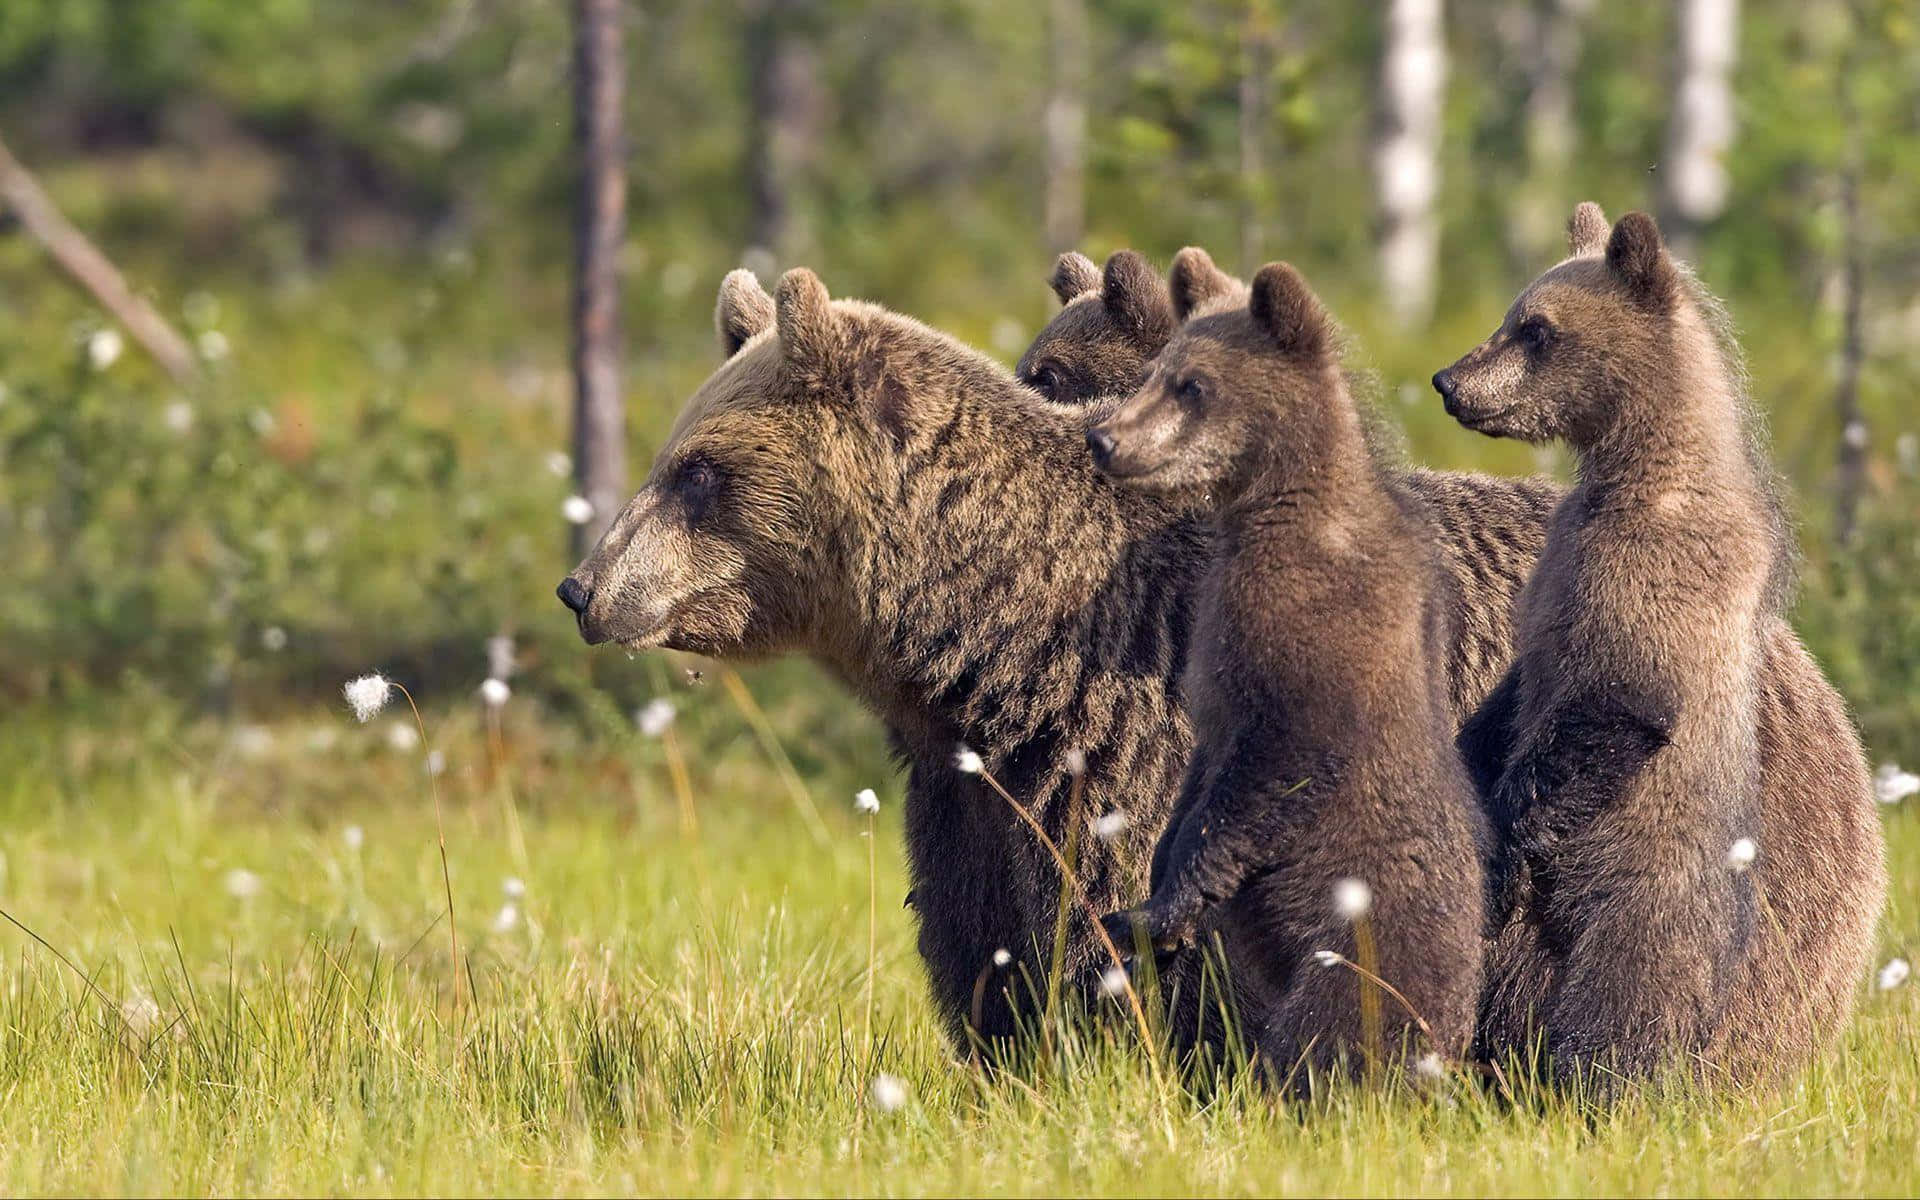 Wild Animals Bears On Grass Picture